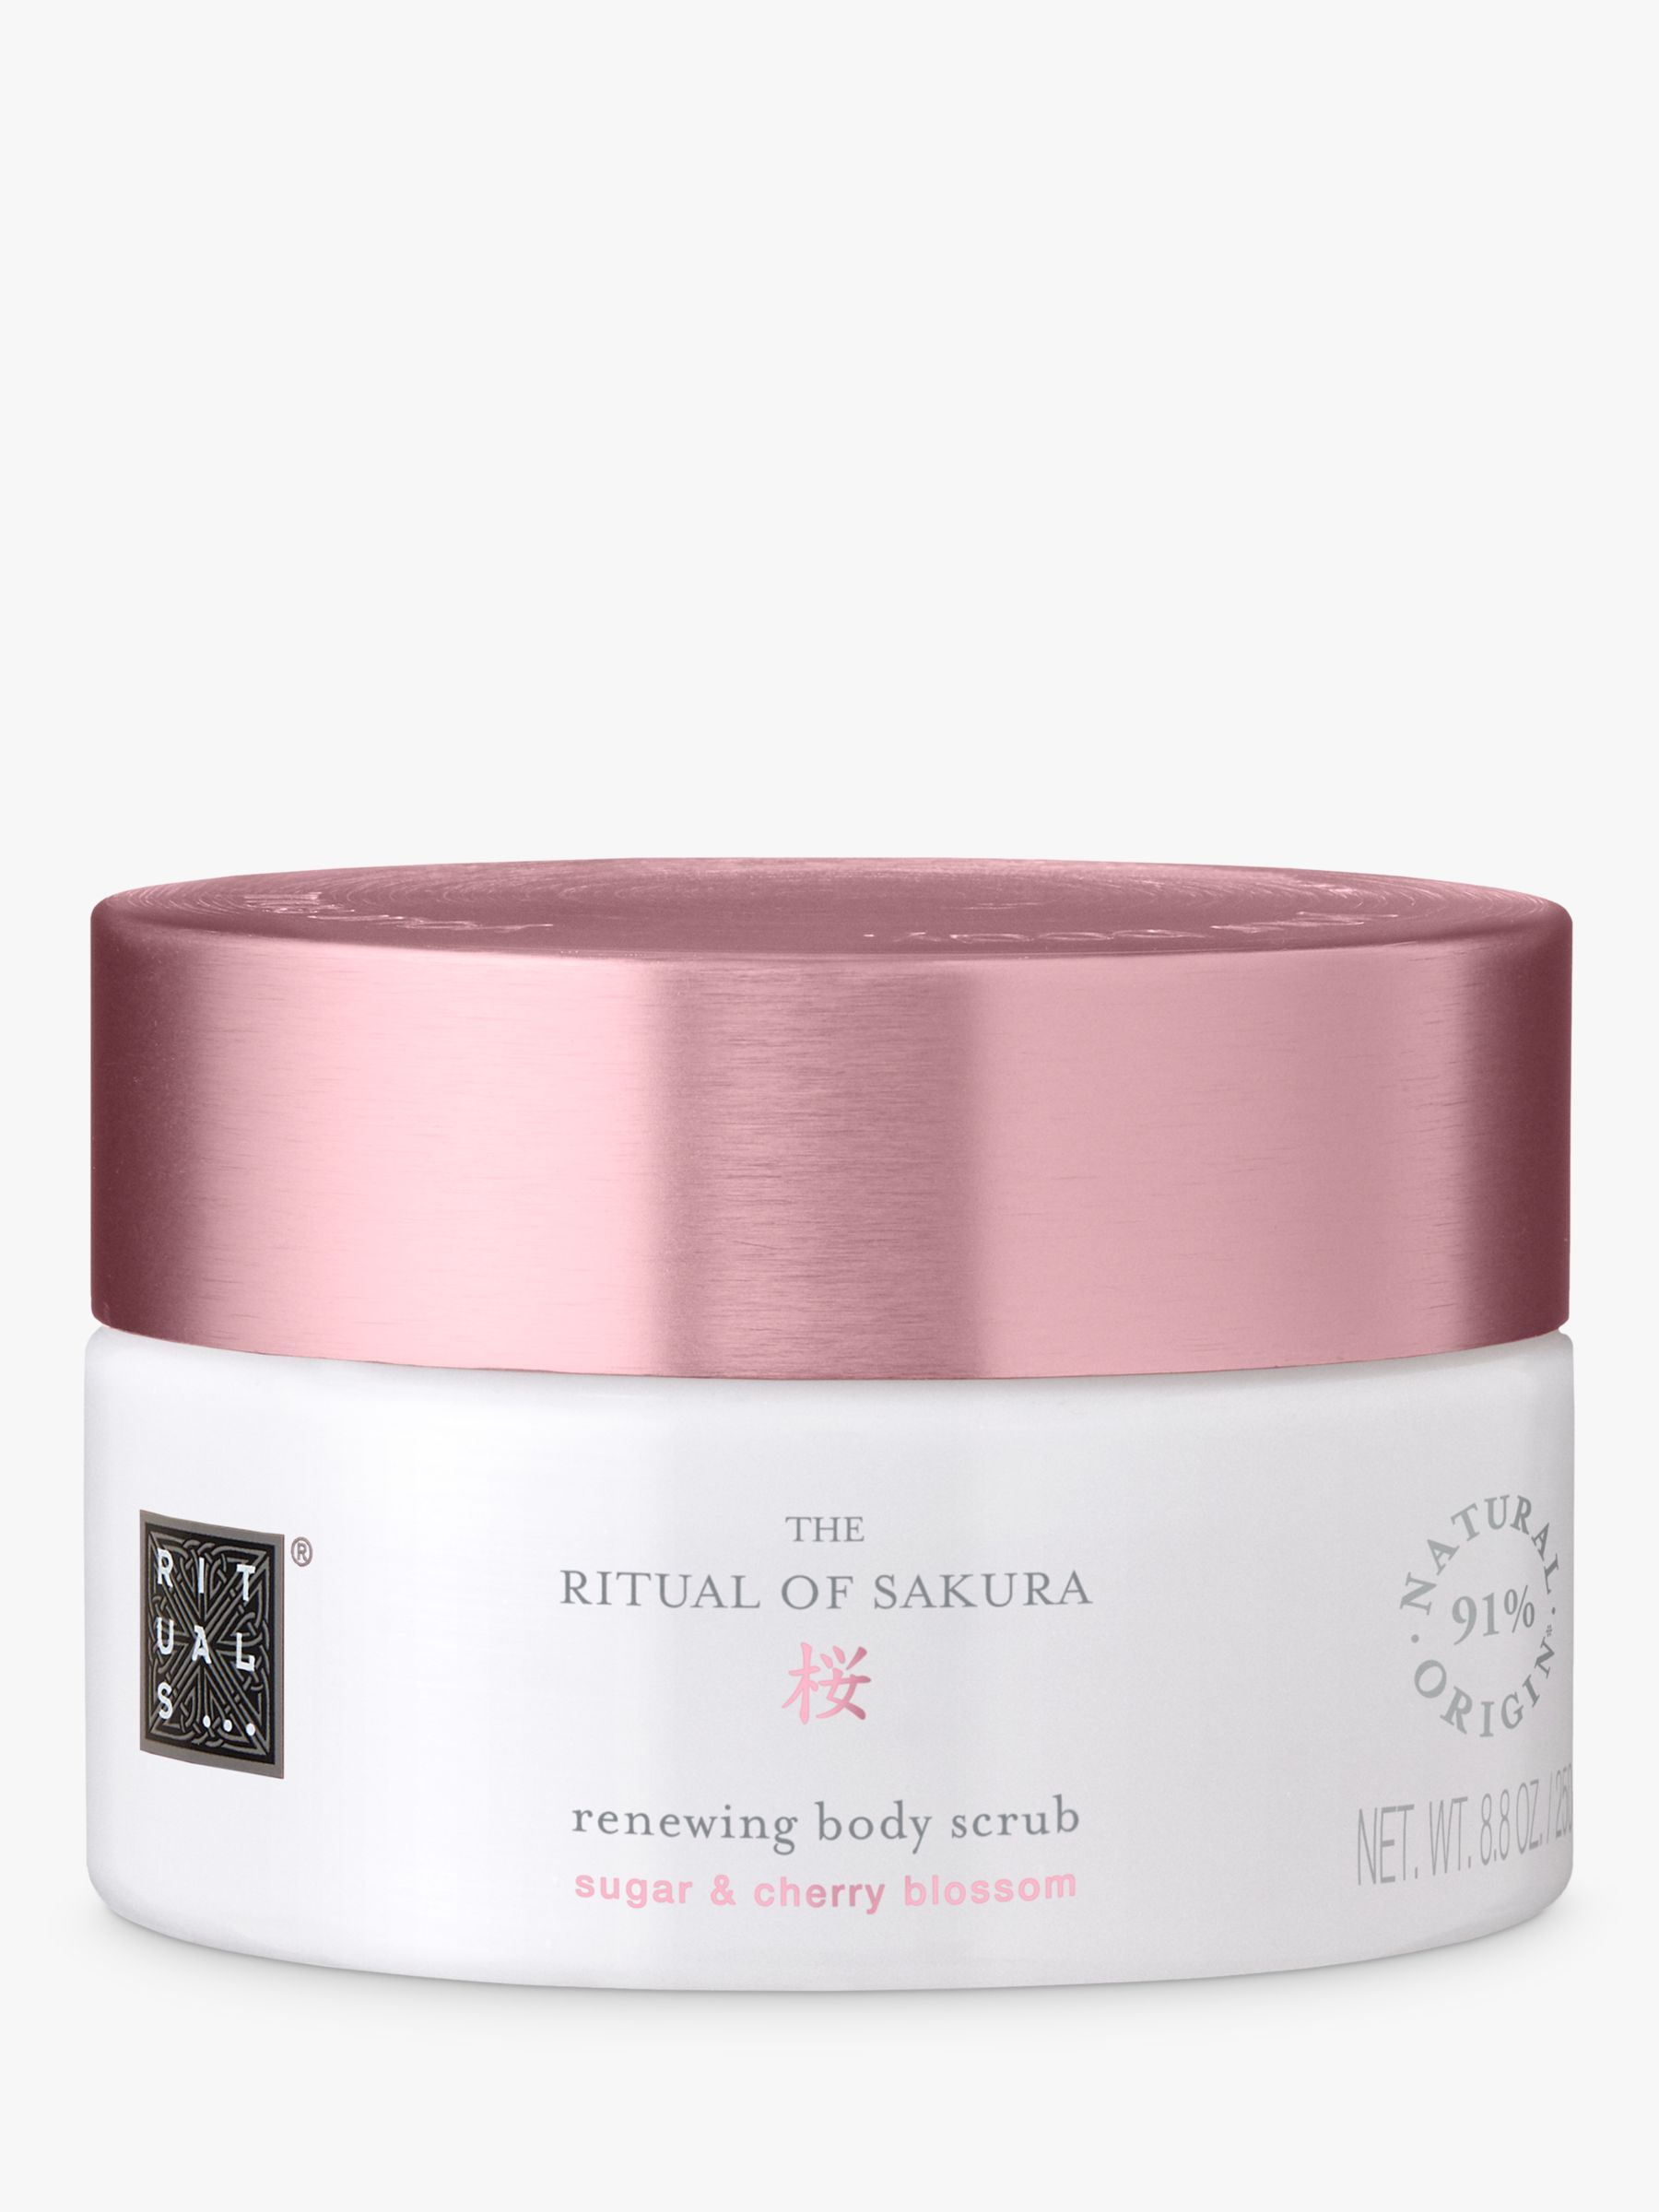 Rituals The Ritual of Sakura Renewing Body Scrub, 250g at John Lewis &  Partners